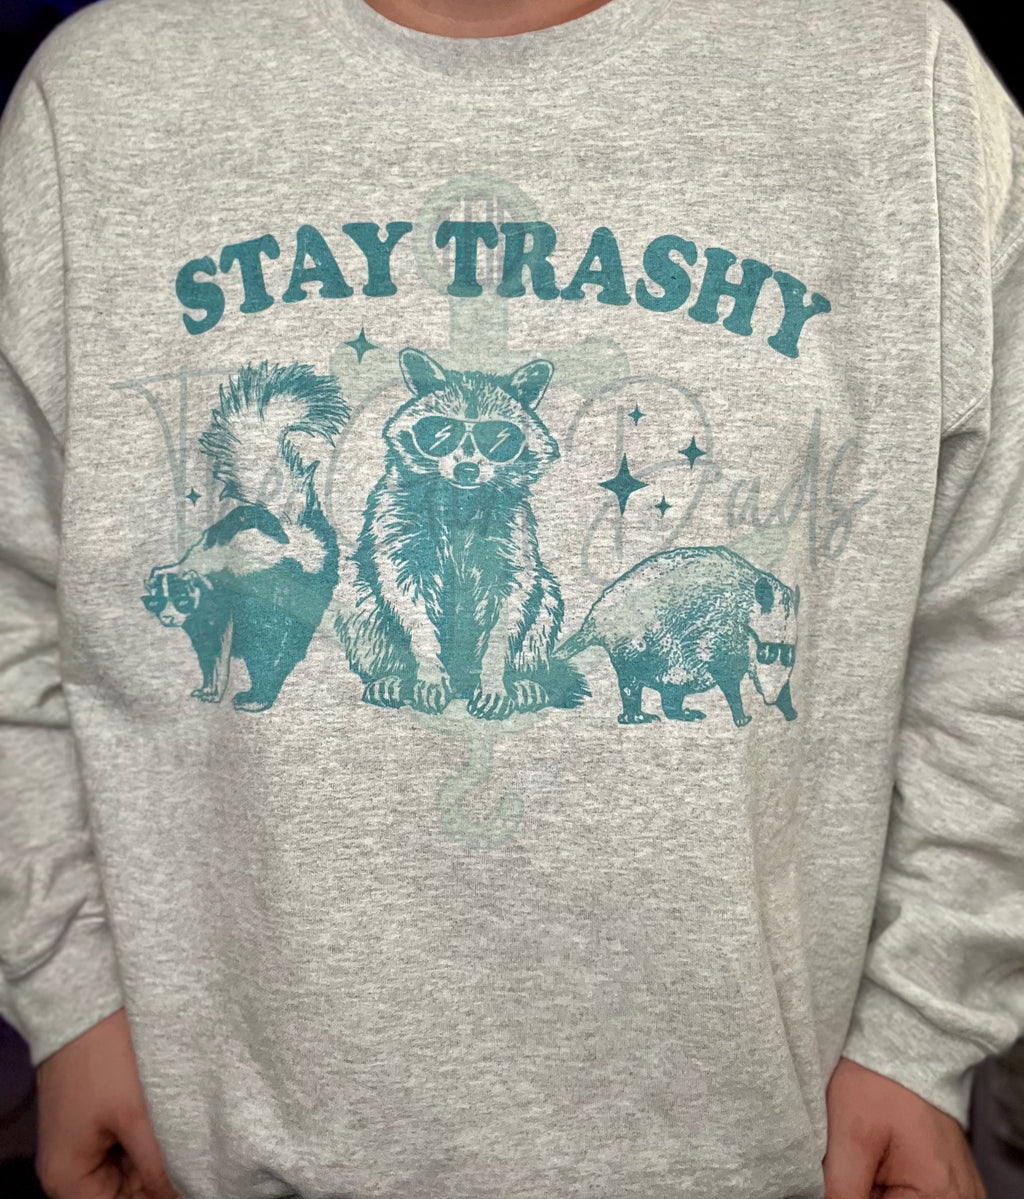 Stay Trashy Top Design